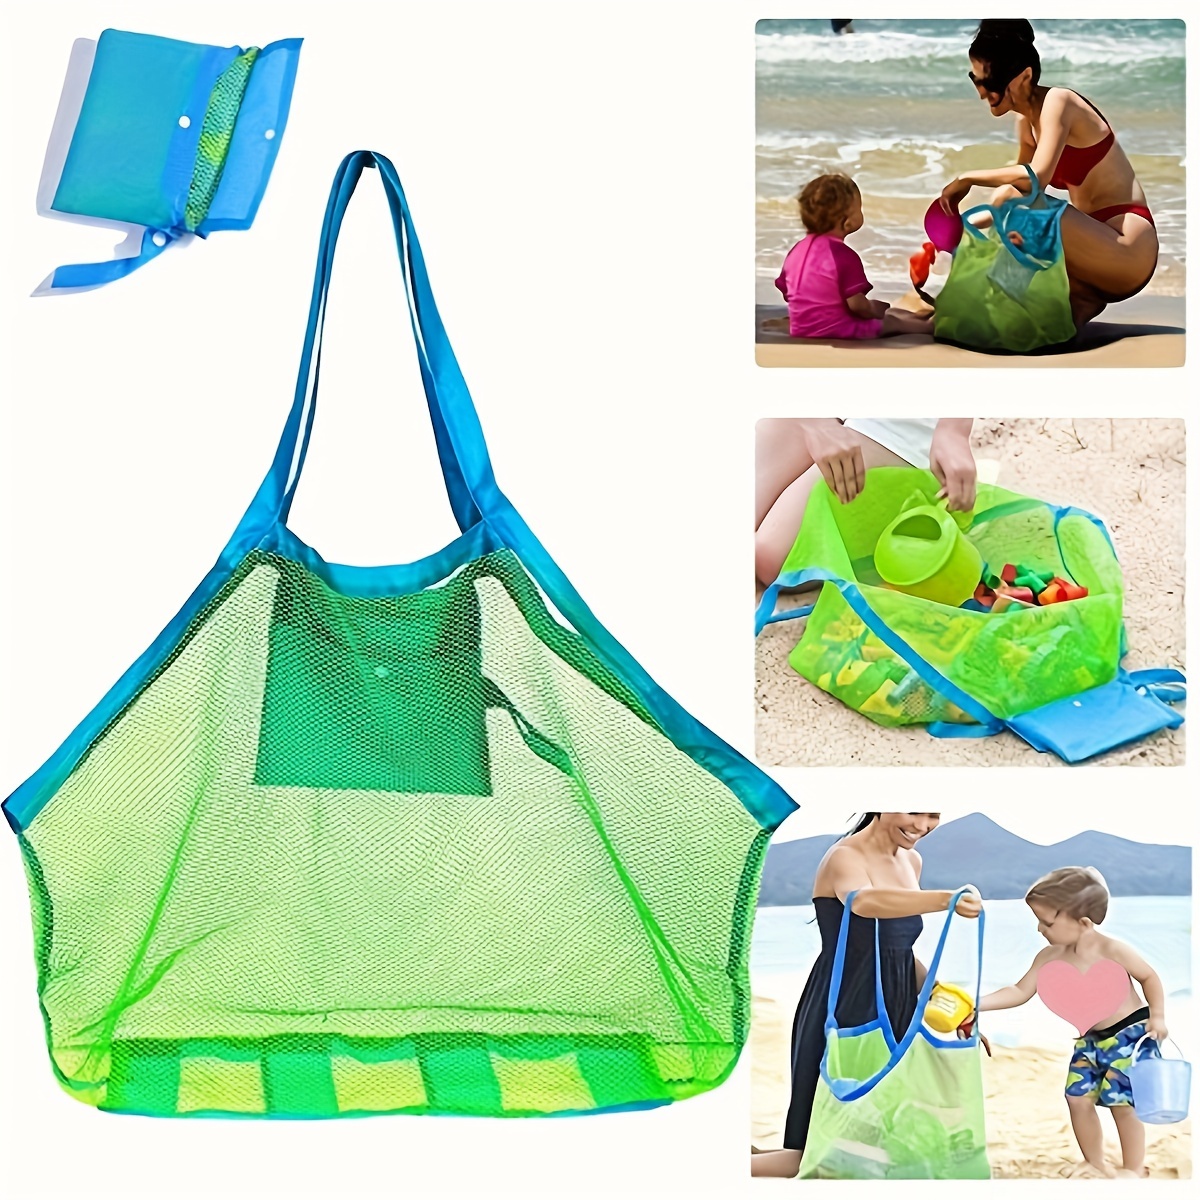 

Mesh Beach Bag, Oversized Beach Bag And Handbag, Backpack, Toy Towel, Sand For Holding Beach Toys, Toy Market, Grocery, Picnic, Handbag, Robin Blue